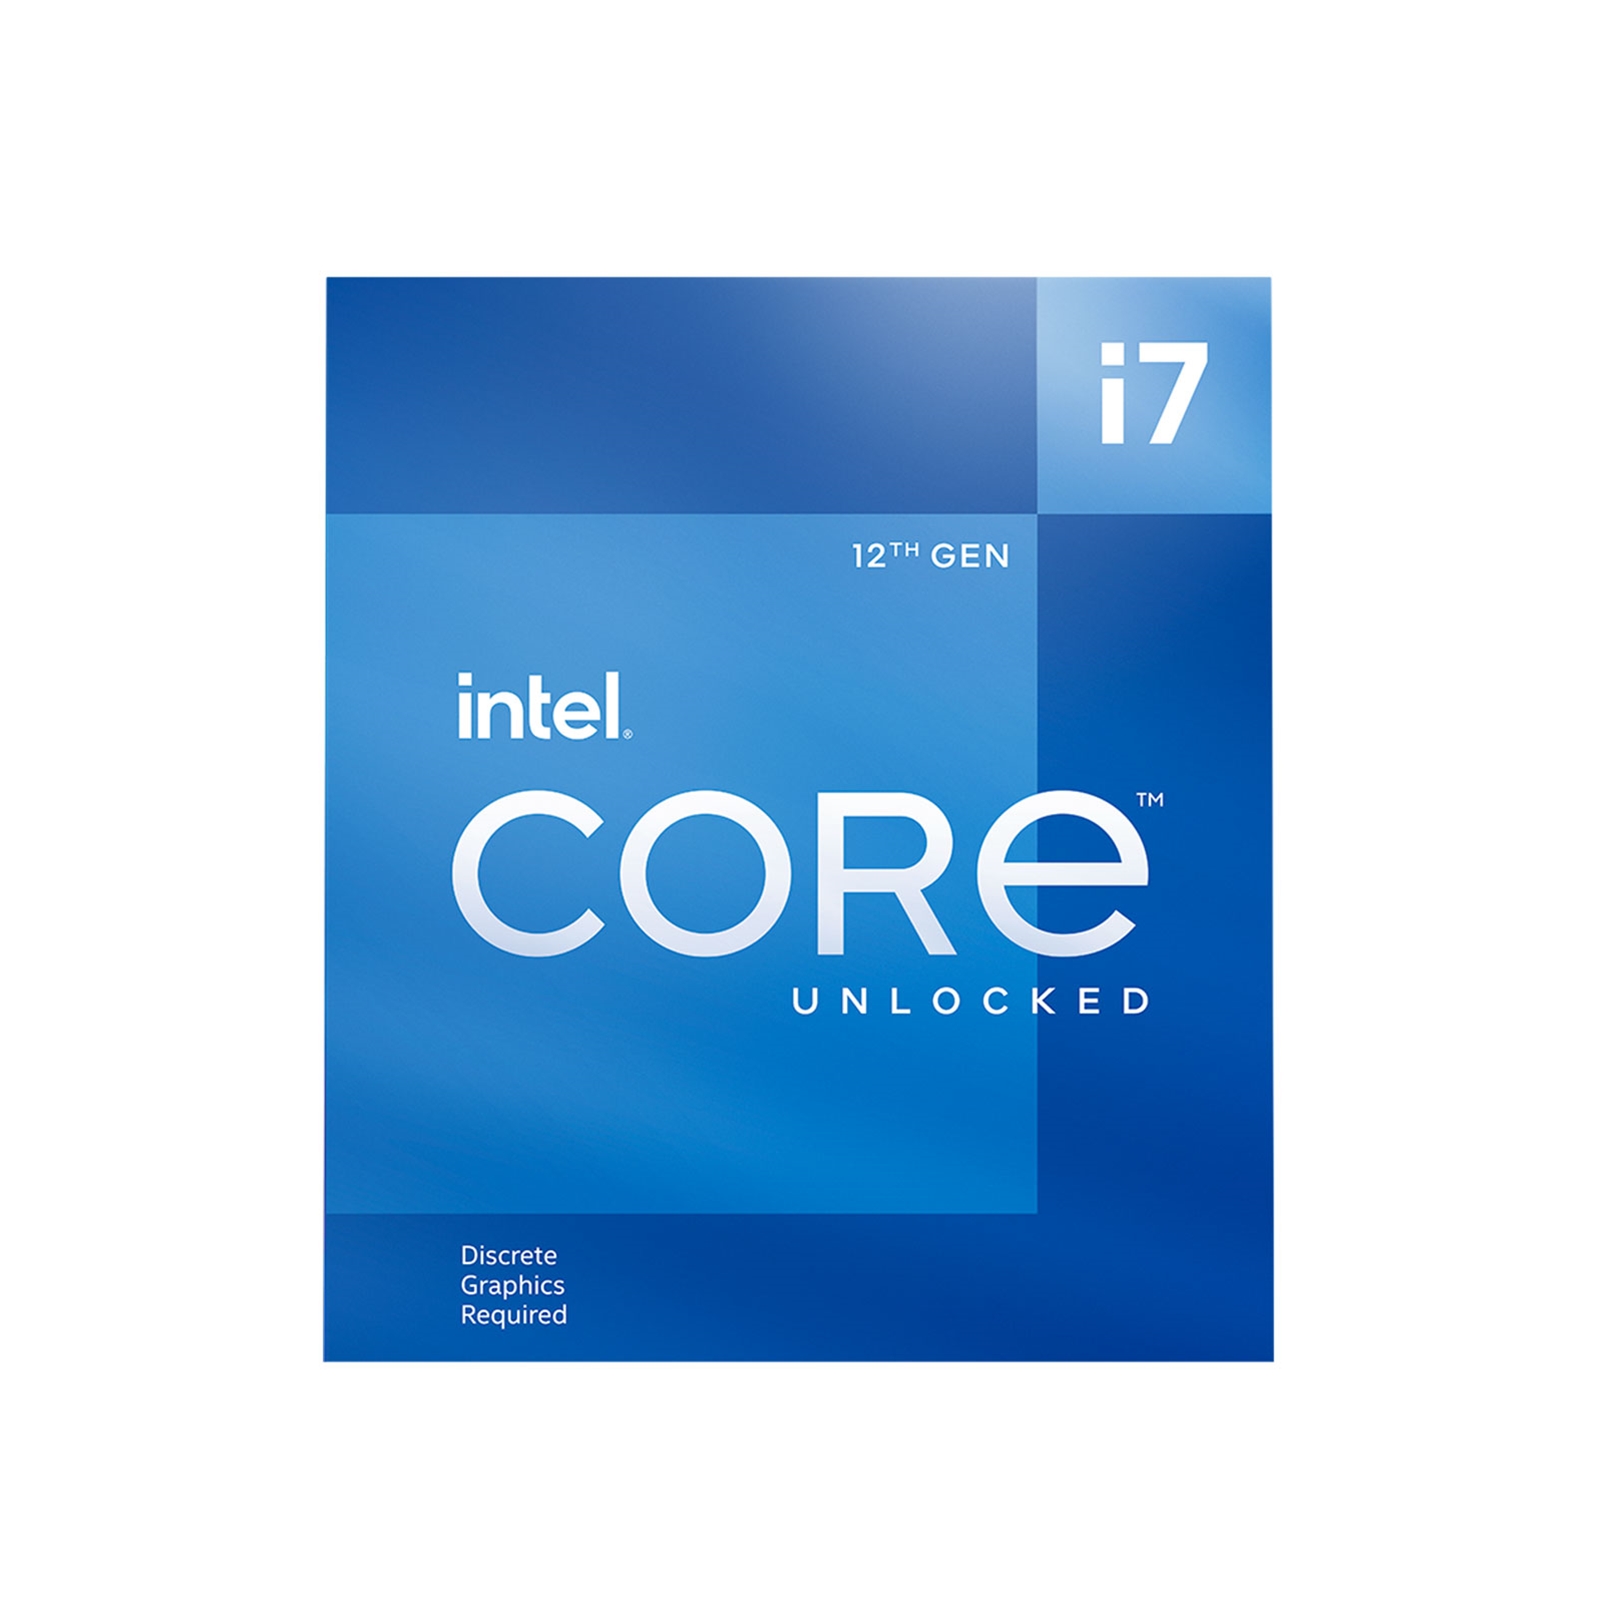 Intel 12th Gen Core i7-12700KF 12 Core Desktop Processor 20 Threads, 3.6GHz up to 5.0GHz Turbo, Alder Lake Socket LGA1700, 25MB Cache, 125W, Maximum Turbo Power 190W Overclockable CPU, No Cooler, No Graphics